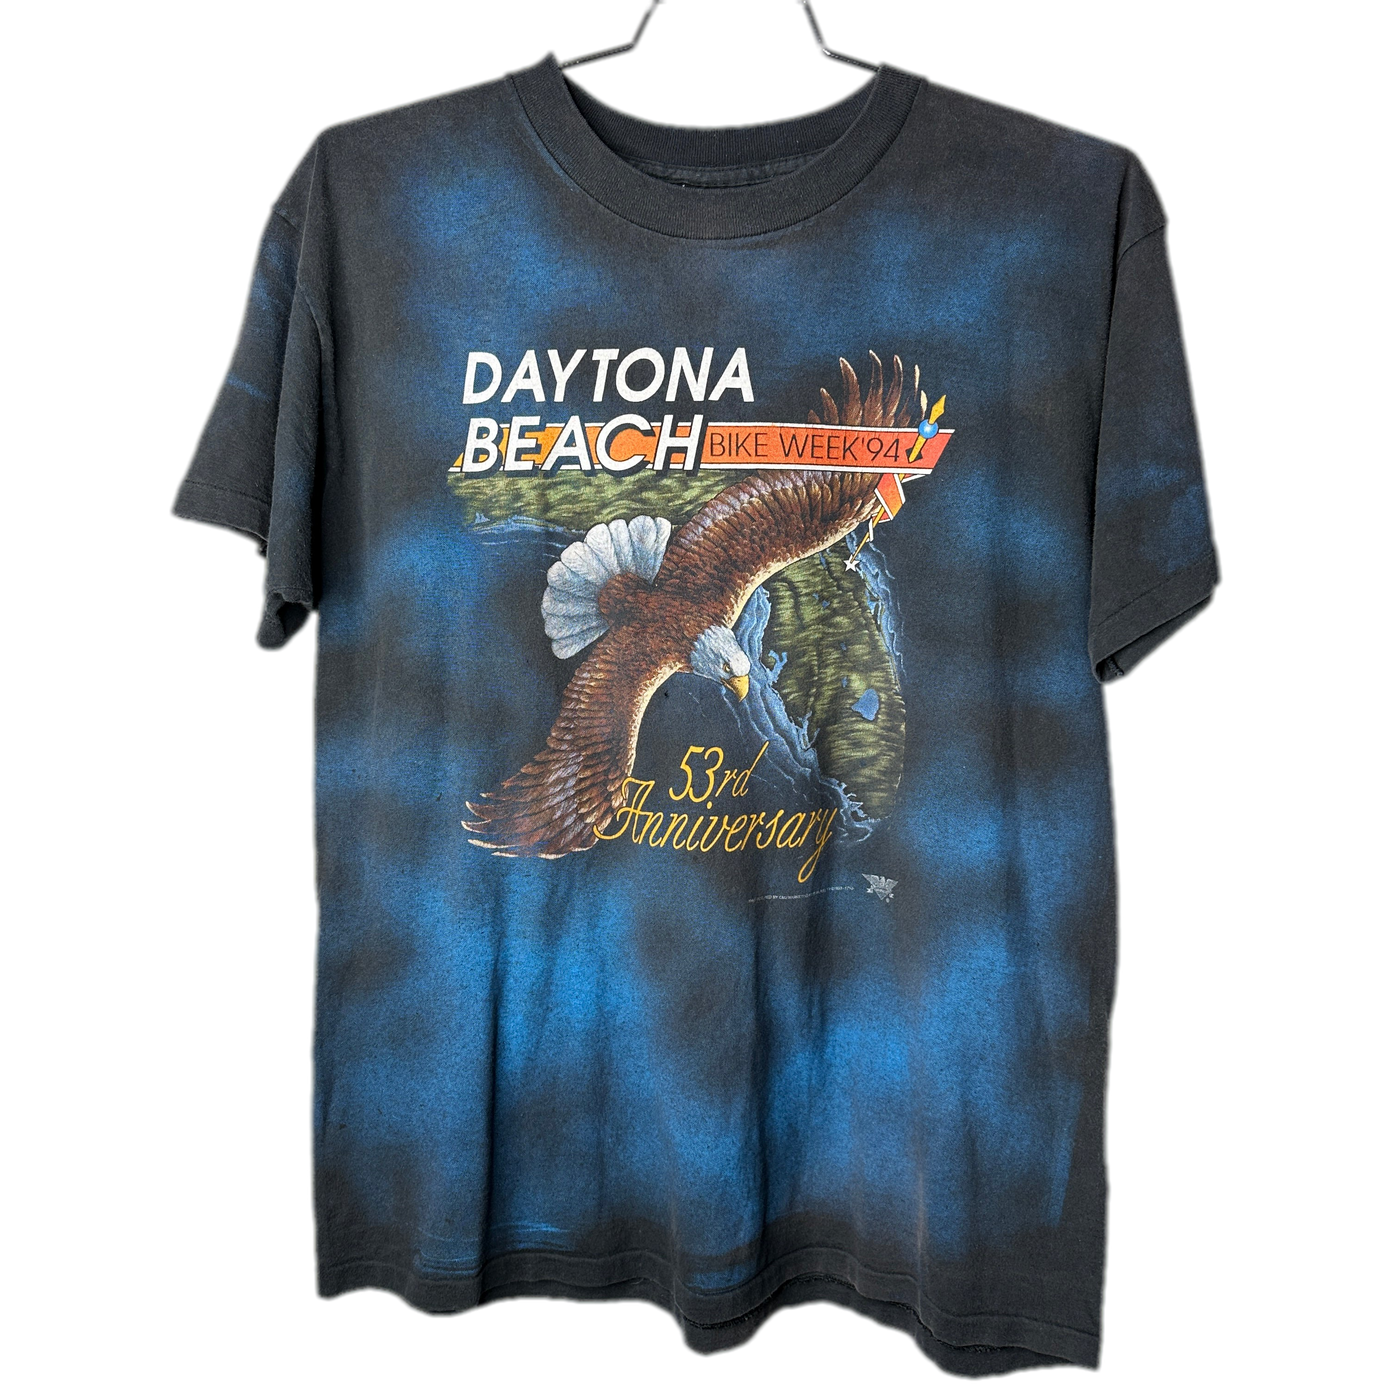 '94 Harley Davidson Bike Week Daytona Beach Eagle and Florida T-shirt sz XL